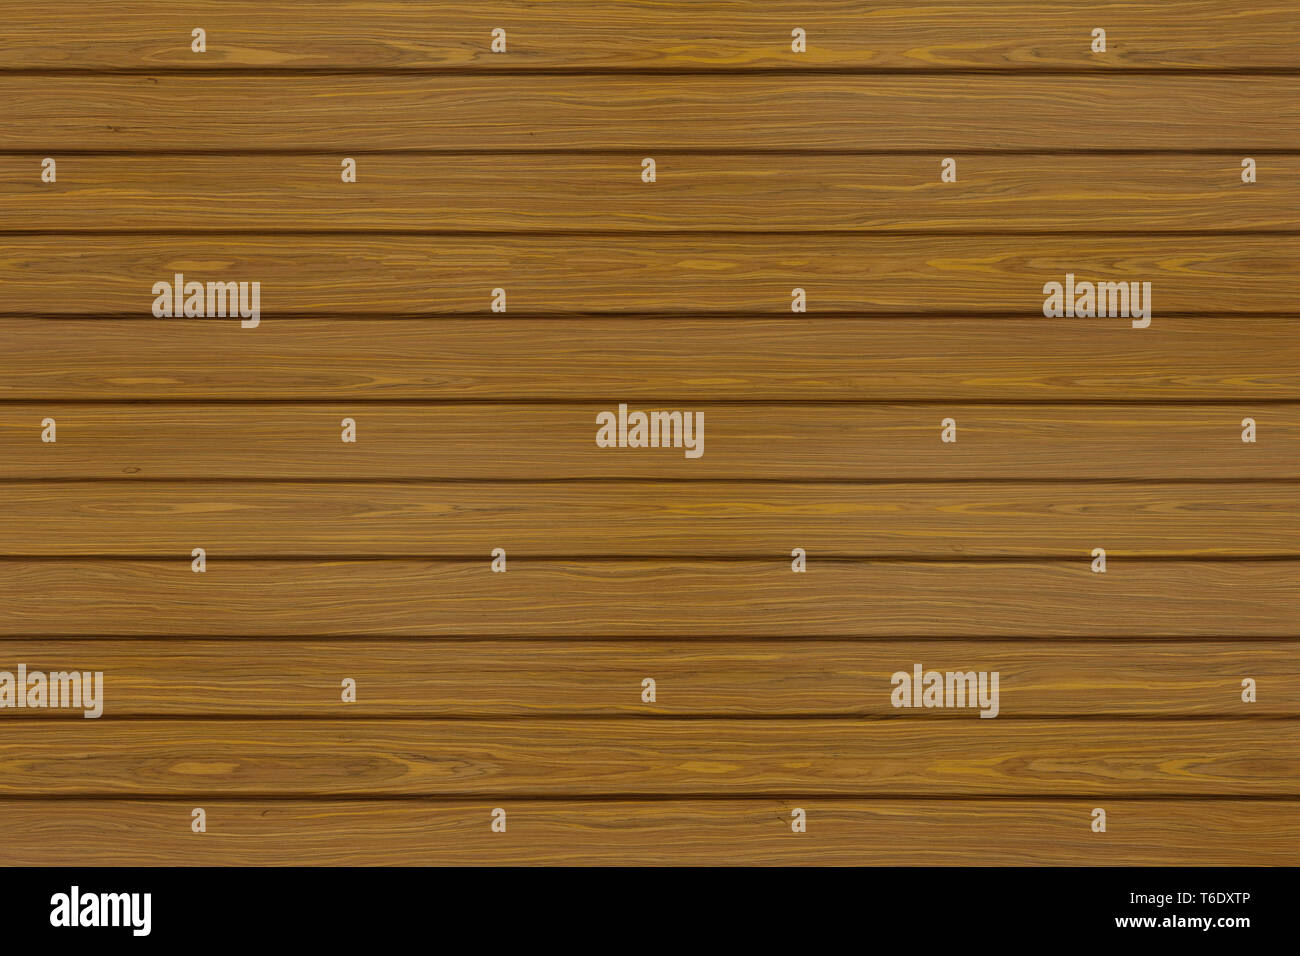 Grunge wood pattern texture background, wooden planks. Stock Photo